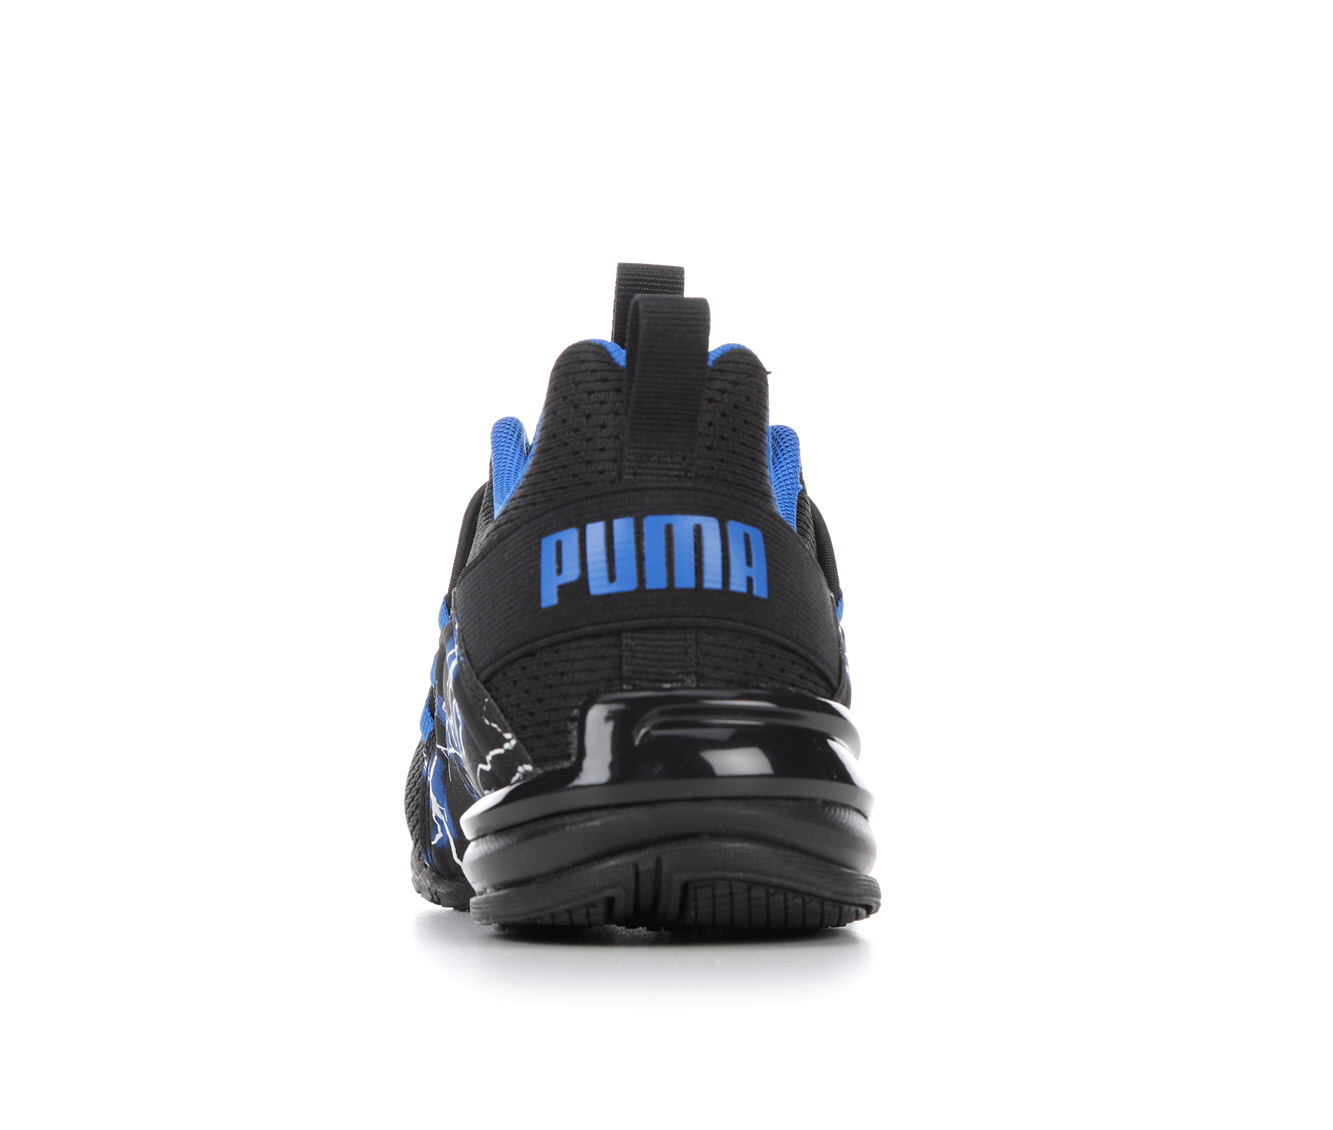 PUMA Shoes & Accessories | Shoe Carnival